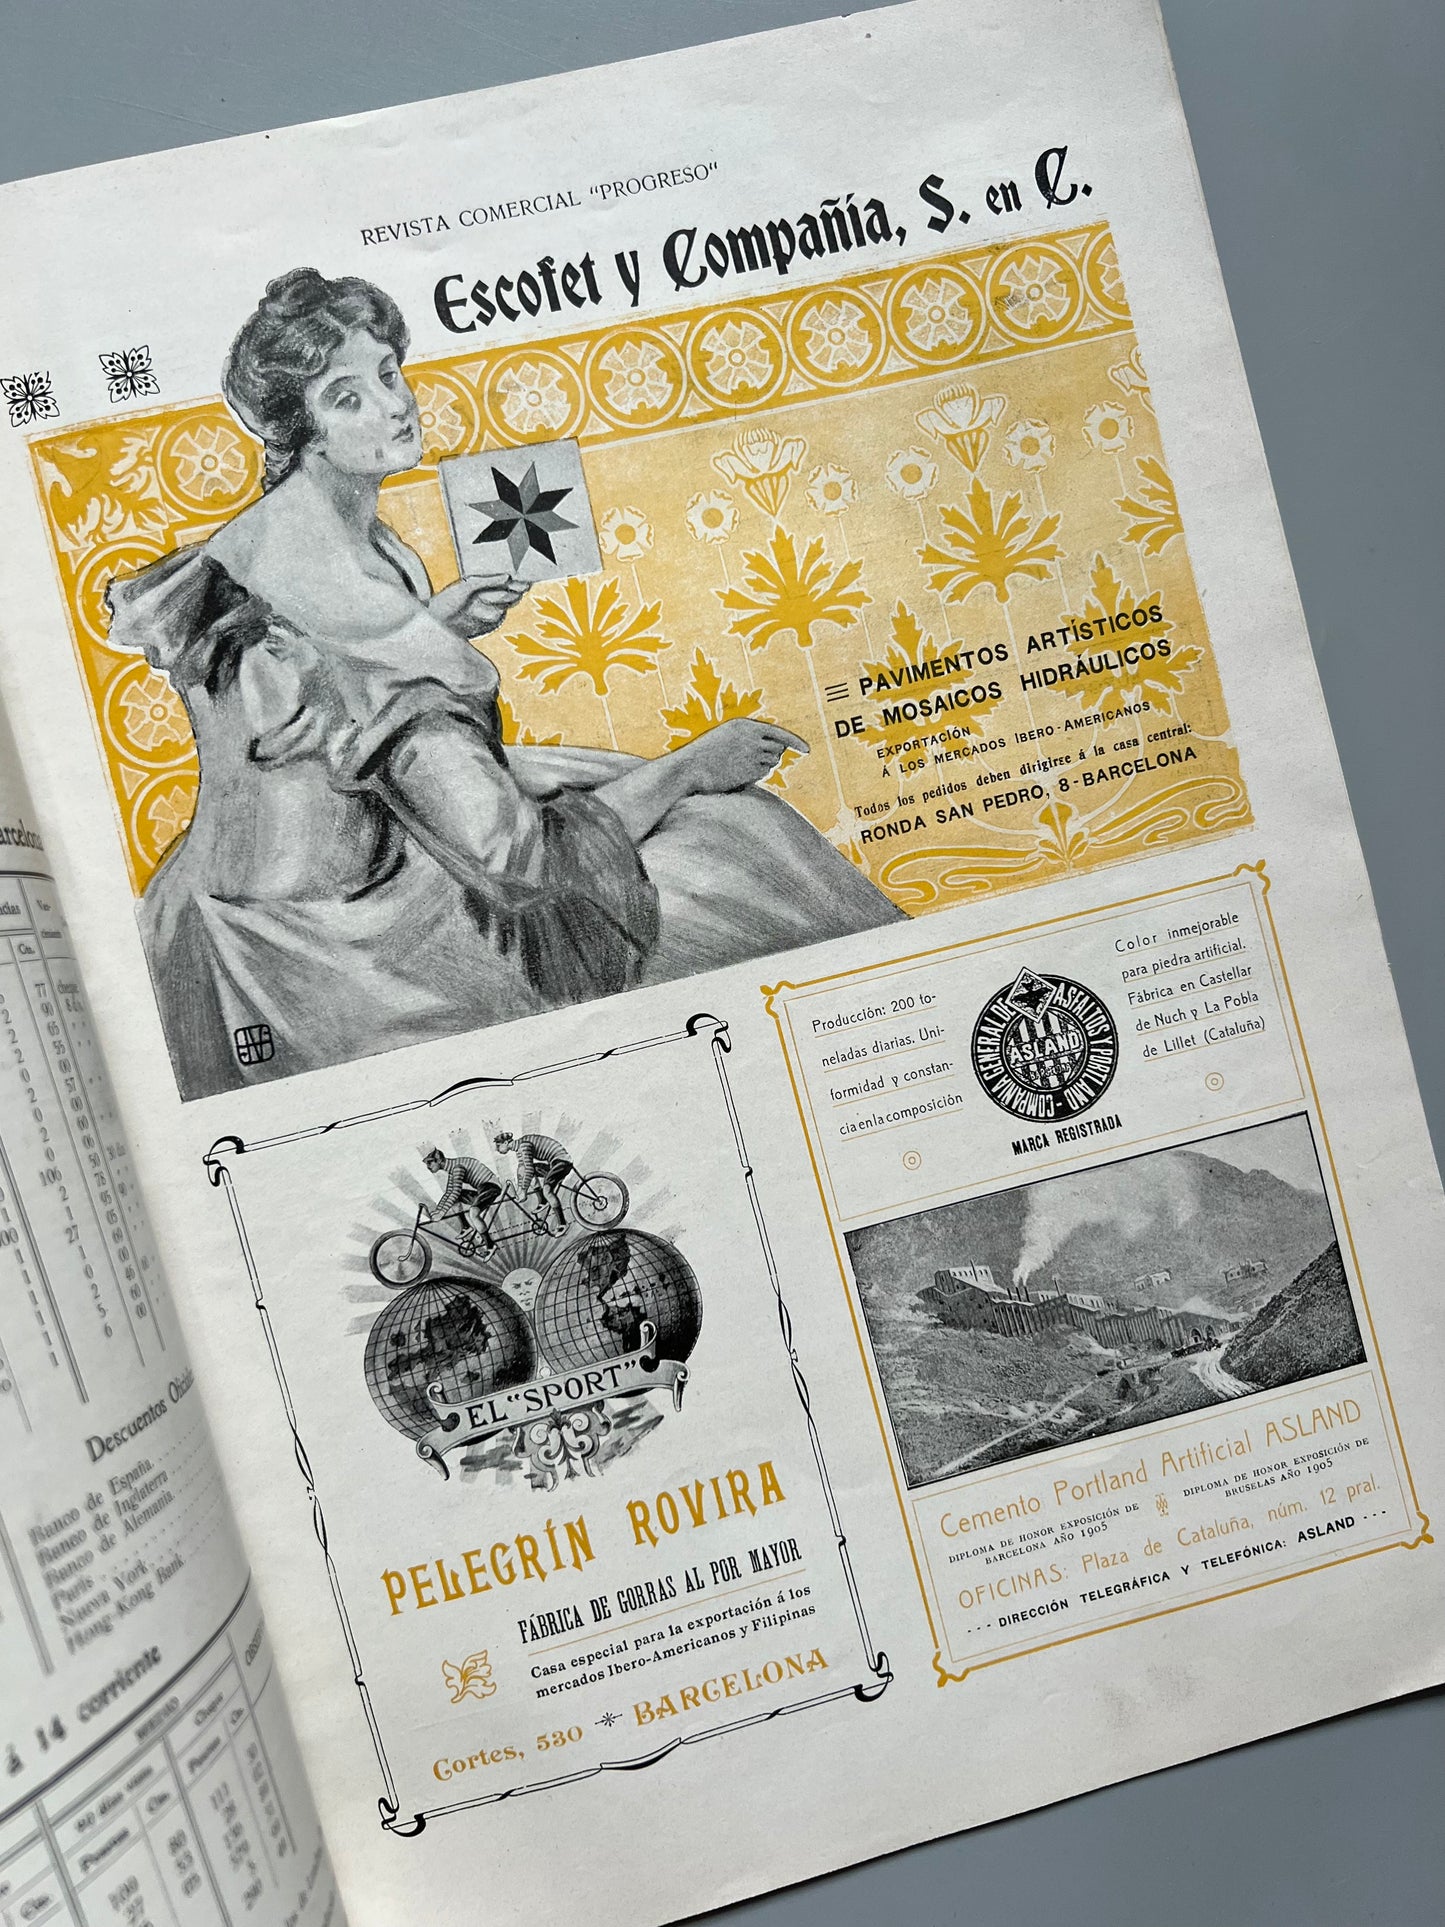 Progreso. Revista comercial, bancaria, científica, literaria de artes é industrias nº4 - Barcelona, septiembre 1906